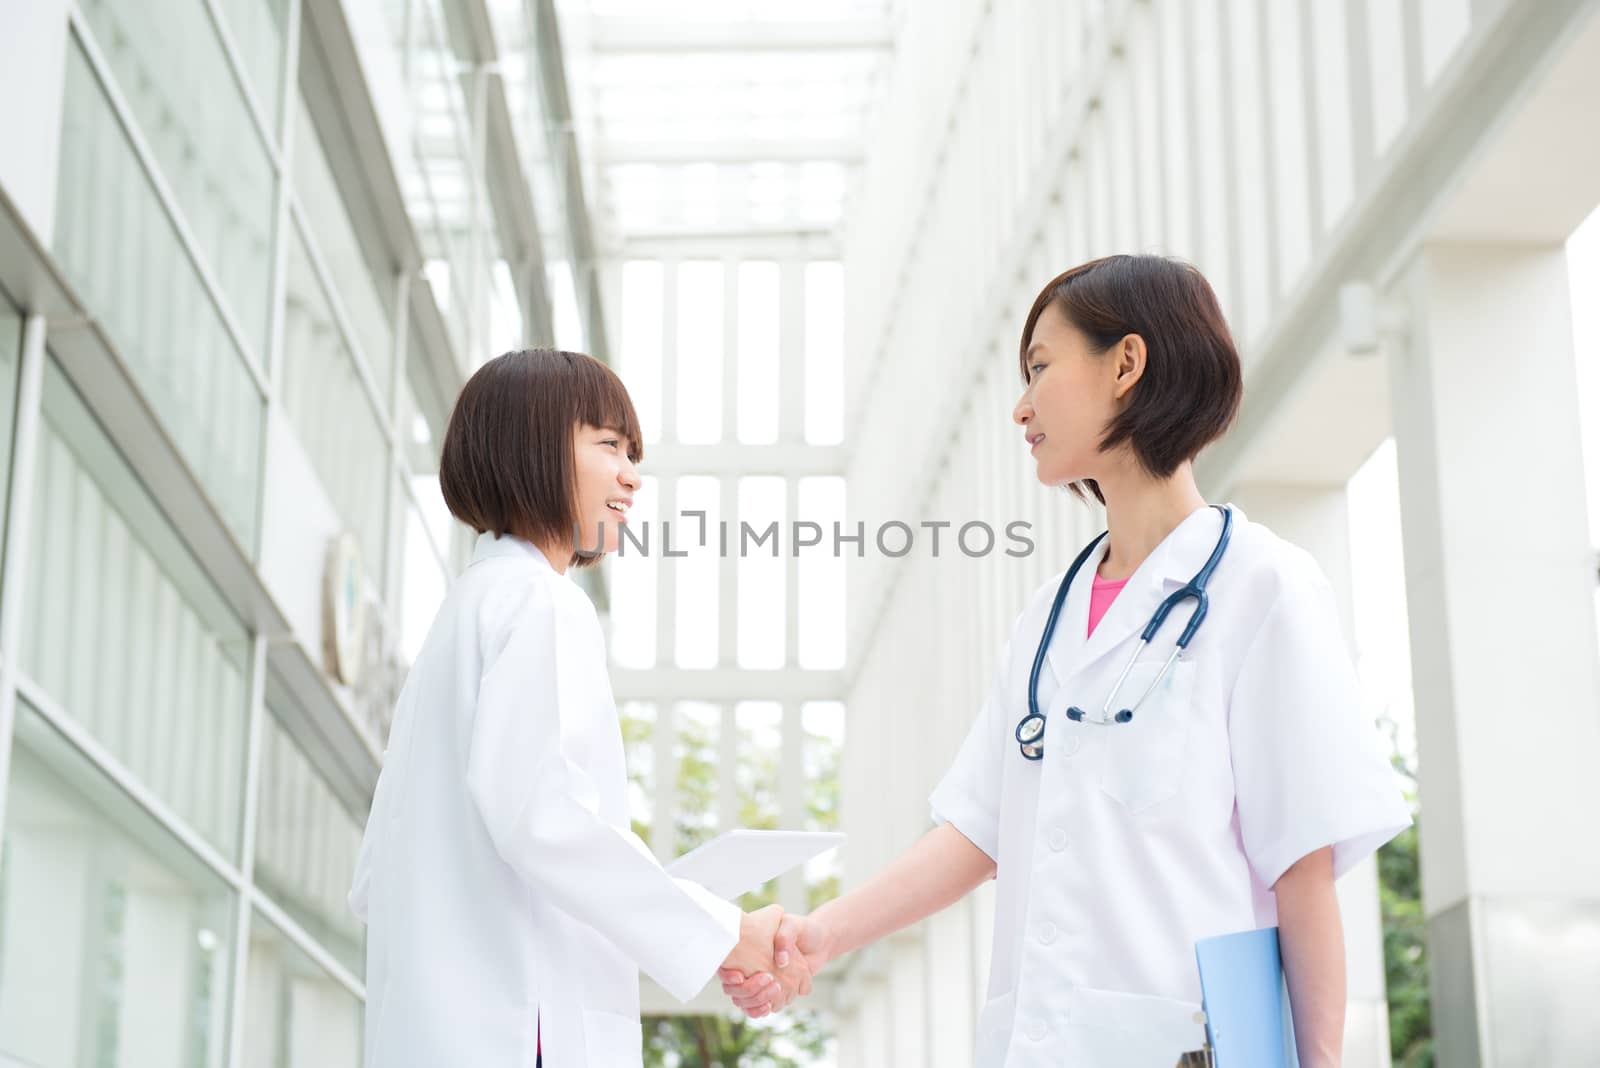 Two Asian medical doctors shaking hands at hospital corridor, teamwork concept.